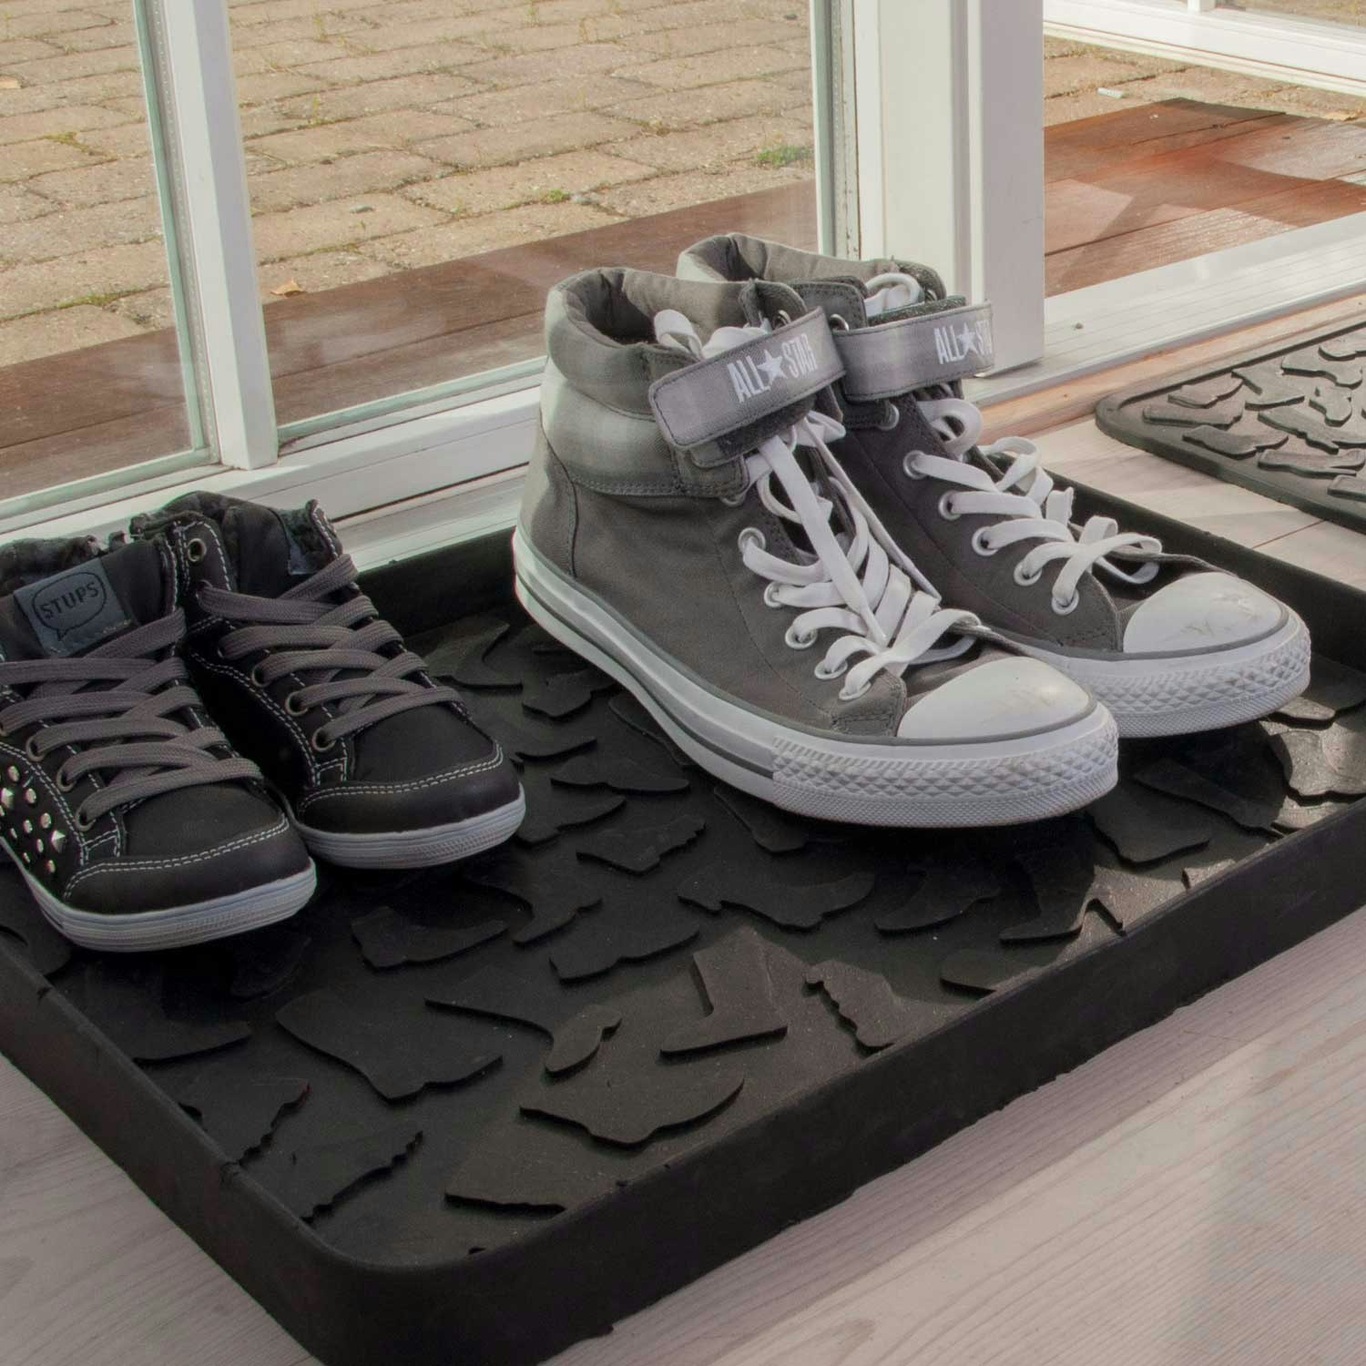 https://royaldesign.com/image/2/tica-copenhagen-footwear-shoe-tray-black-9?w=800&quality=80